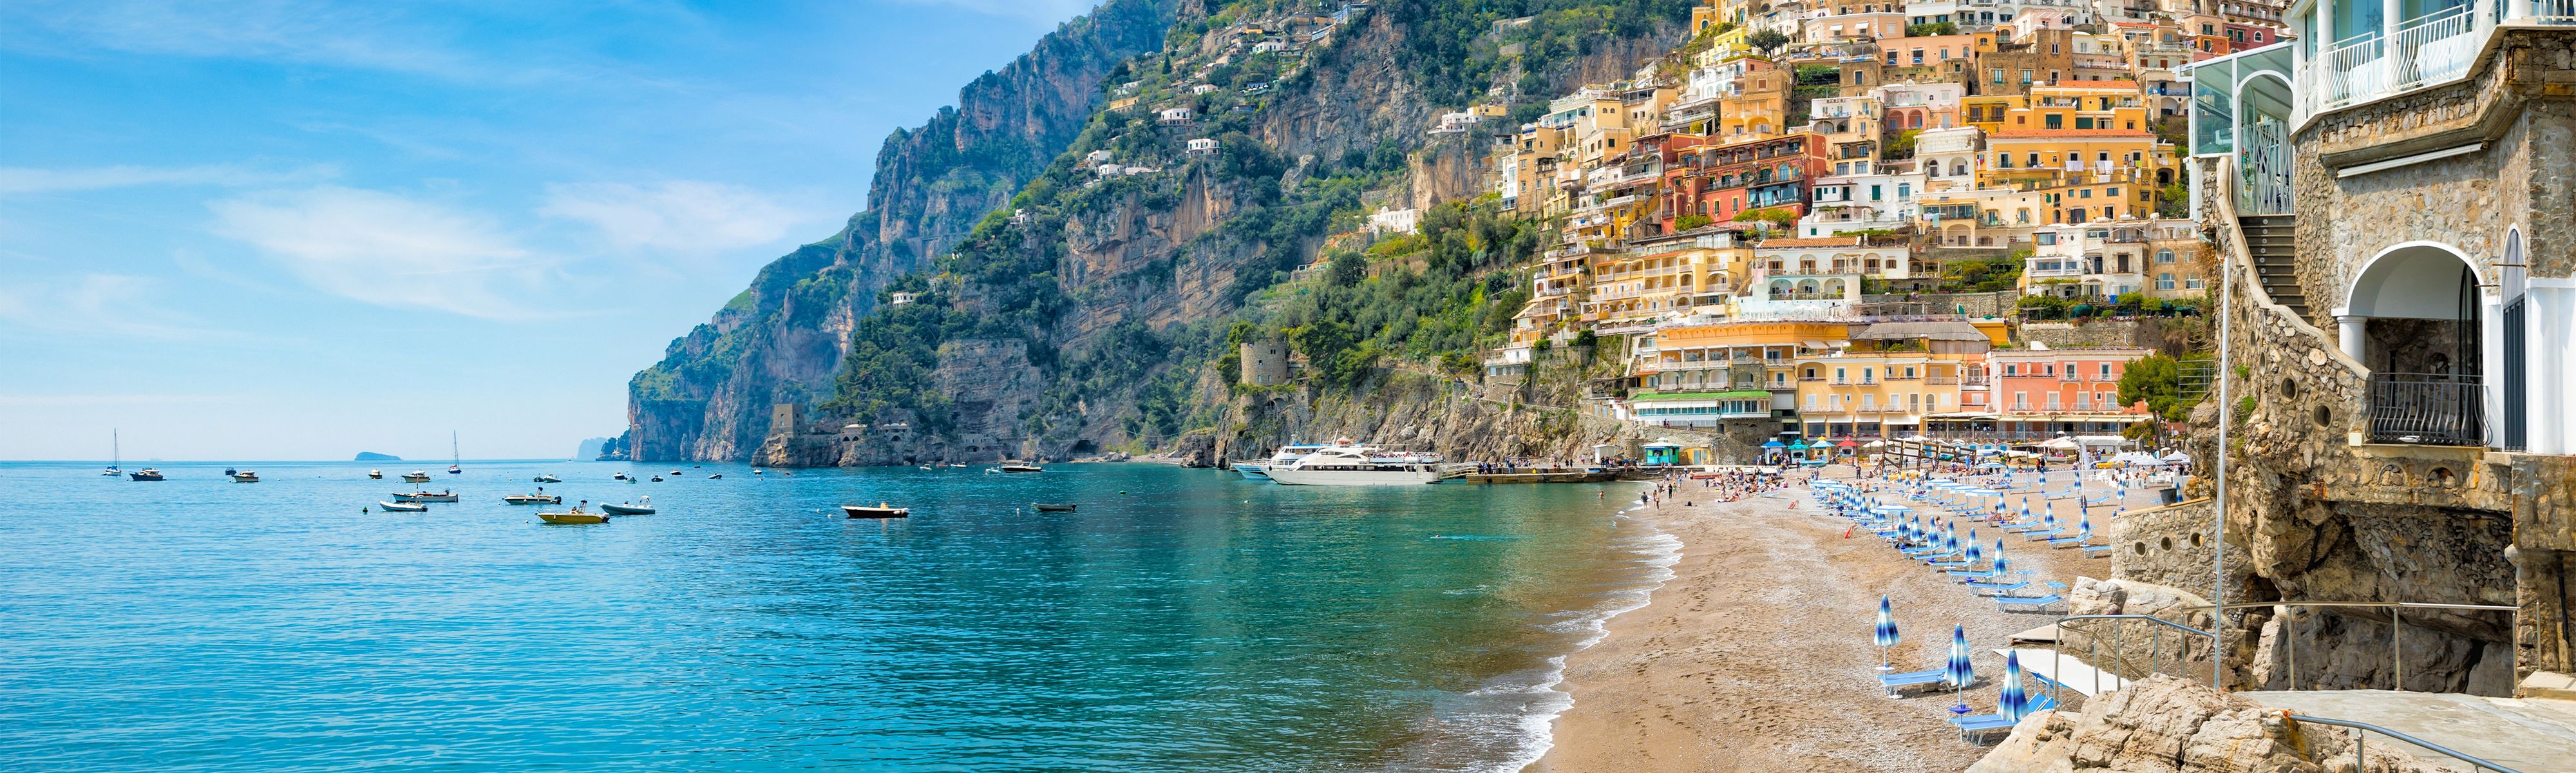 boats sitting in marina along the coast of the amalfi coast in italy